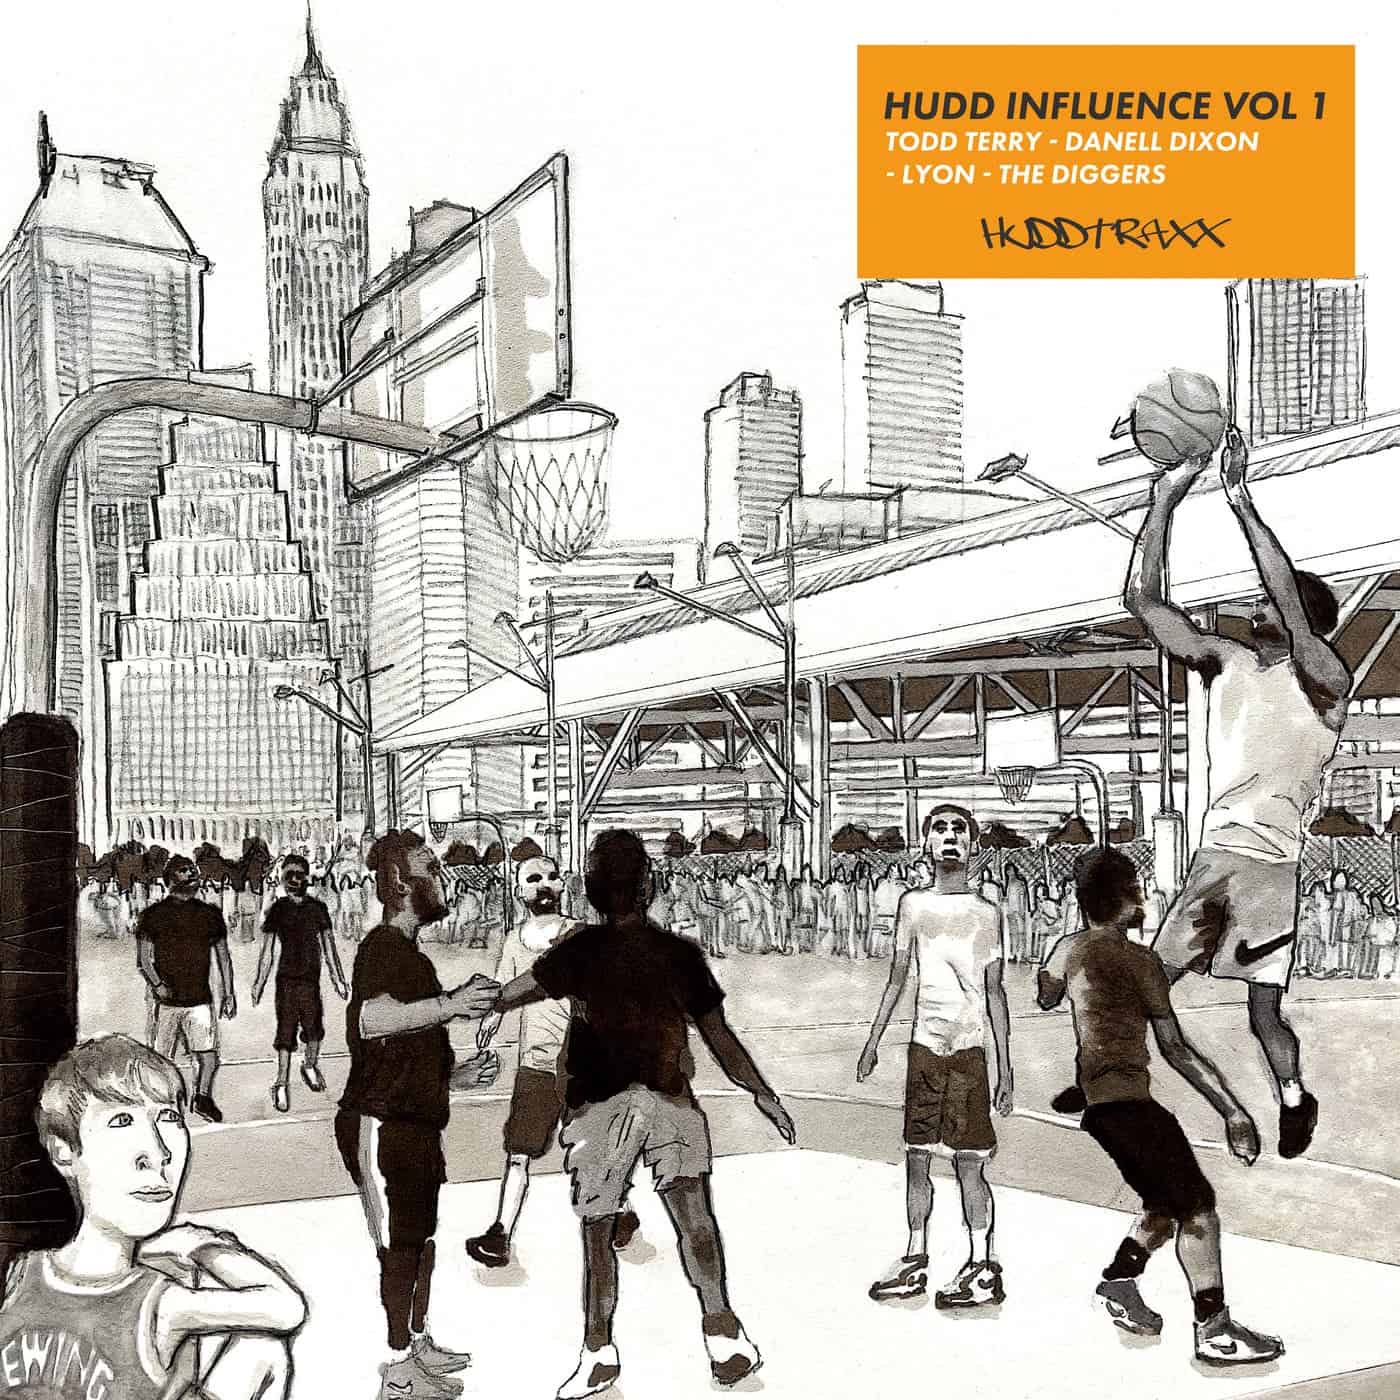 image cover: Todd Terry, Lyon, Danell Dixon, The Diggers - Hudd Influence Vol 1 / HUDDI001